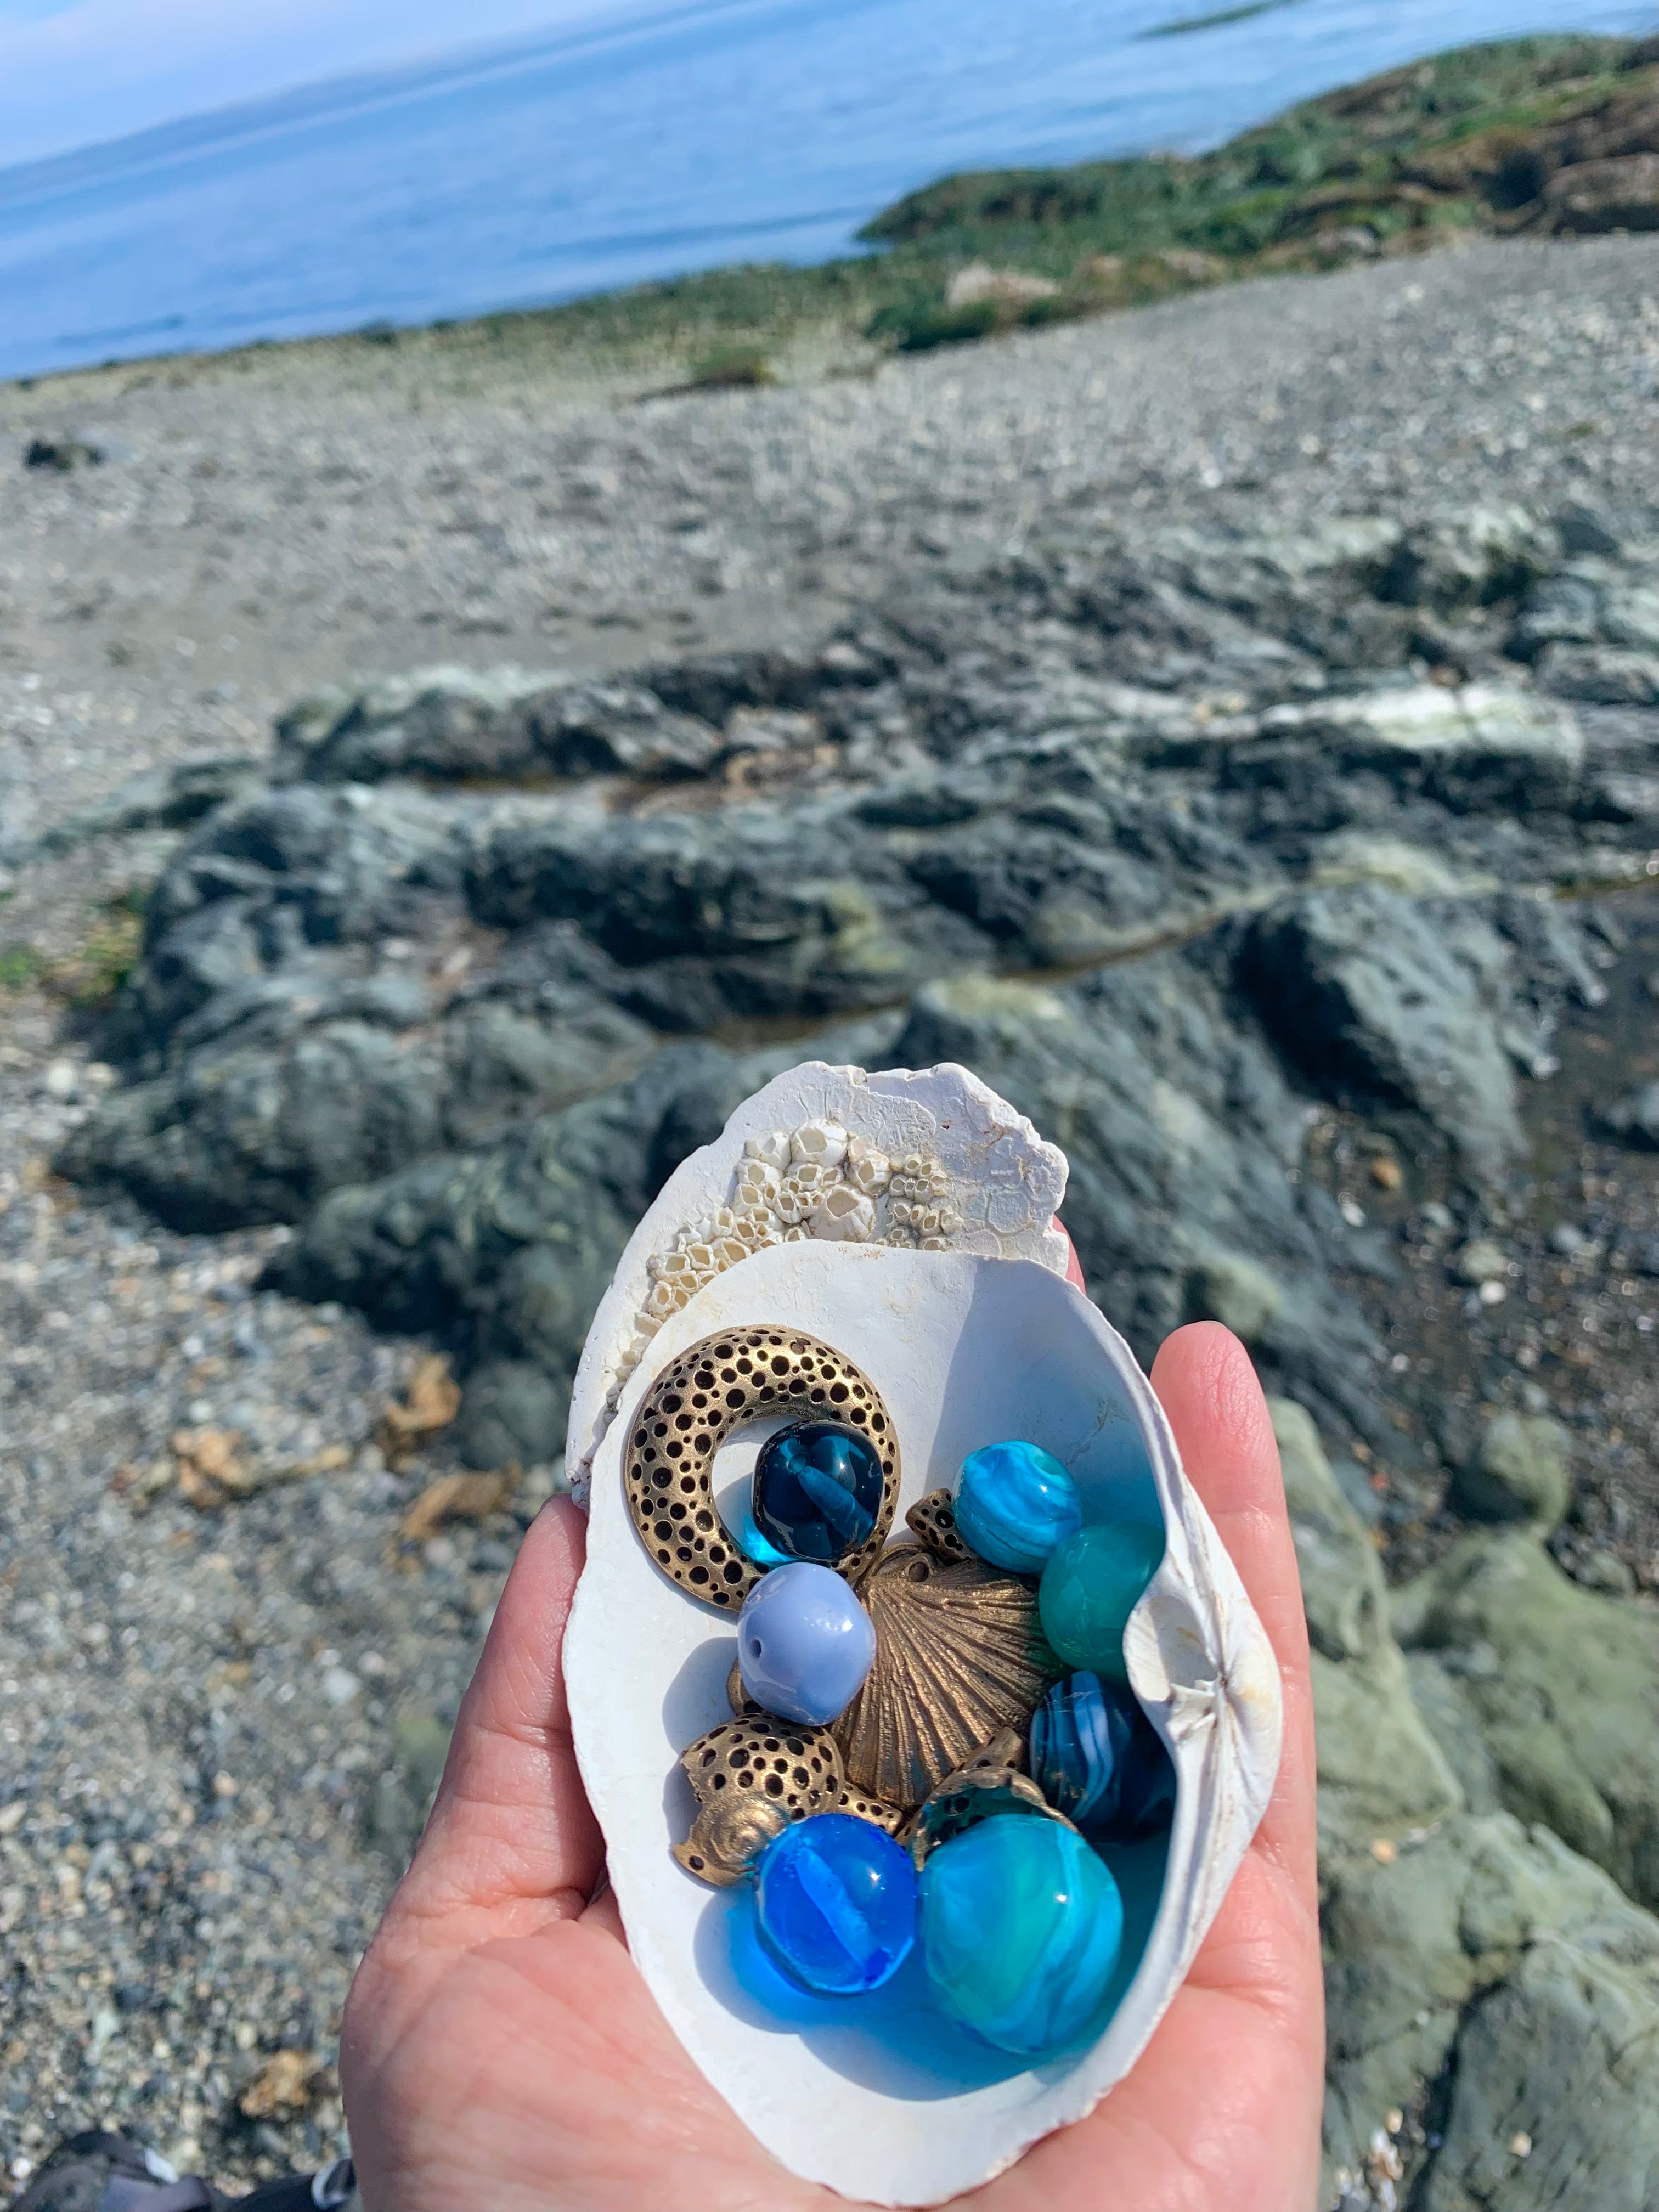 Seashell with treasure at the beach